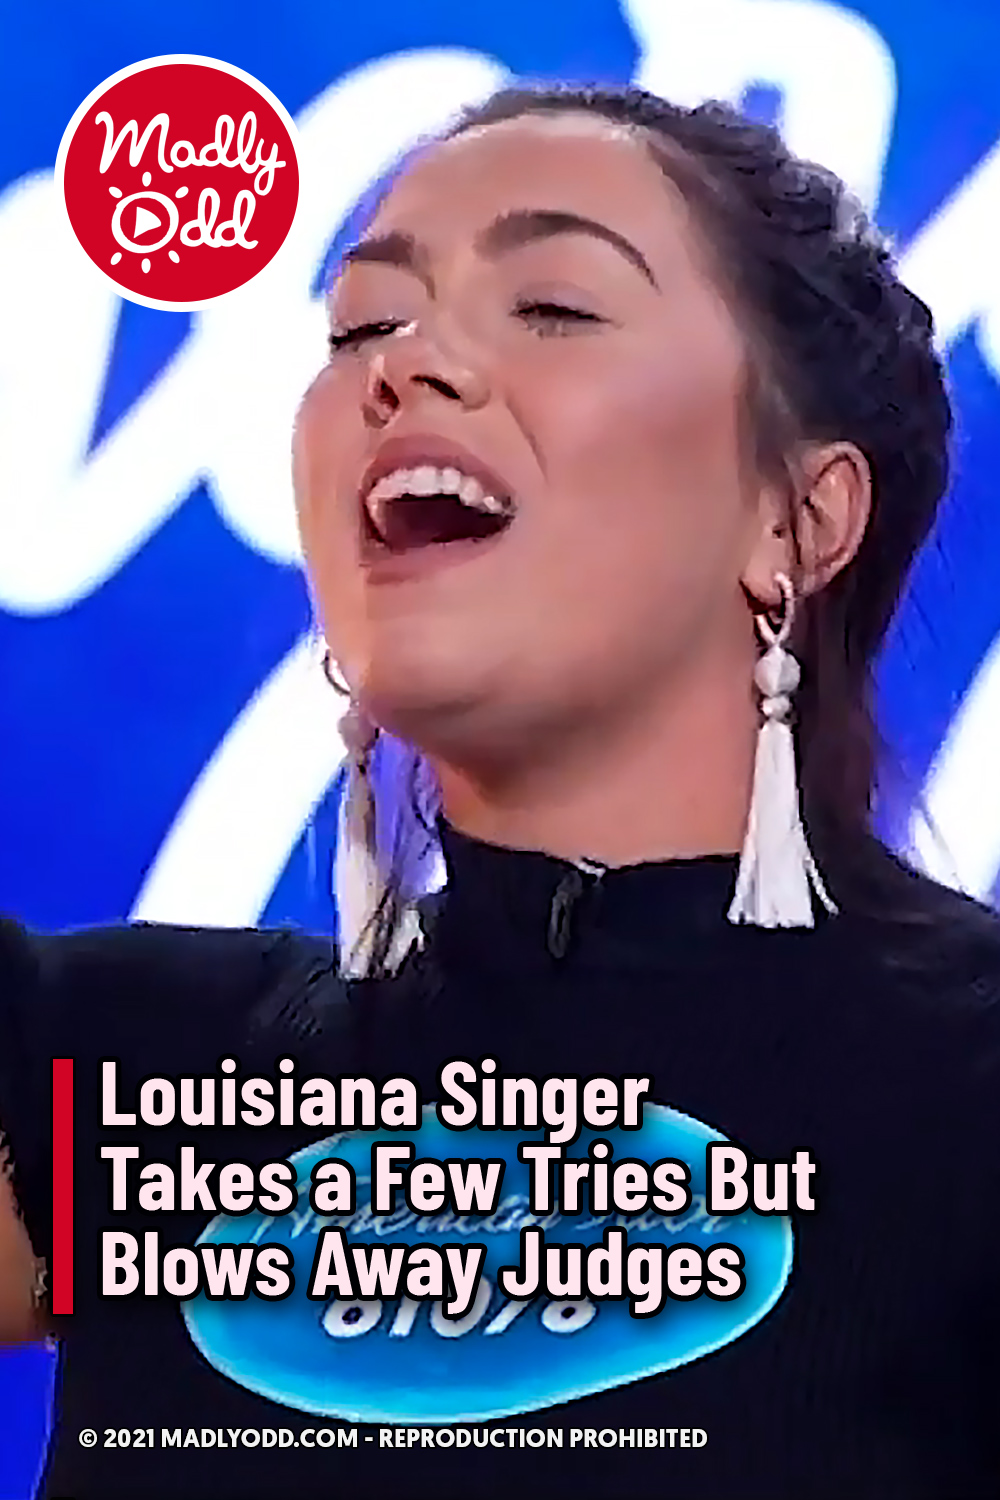 Louisiana Singer Takes a Few Tries But Blows Away Judges